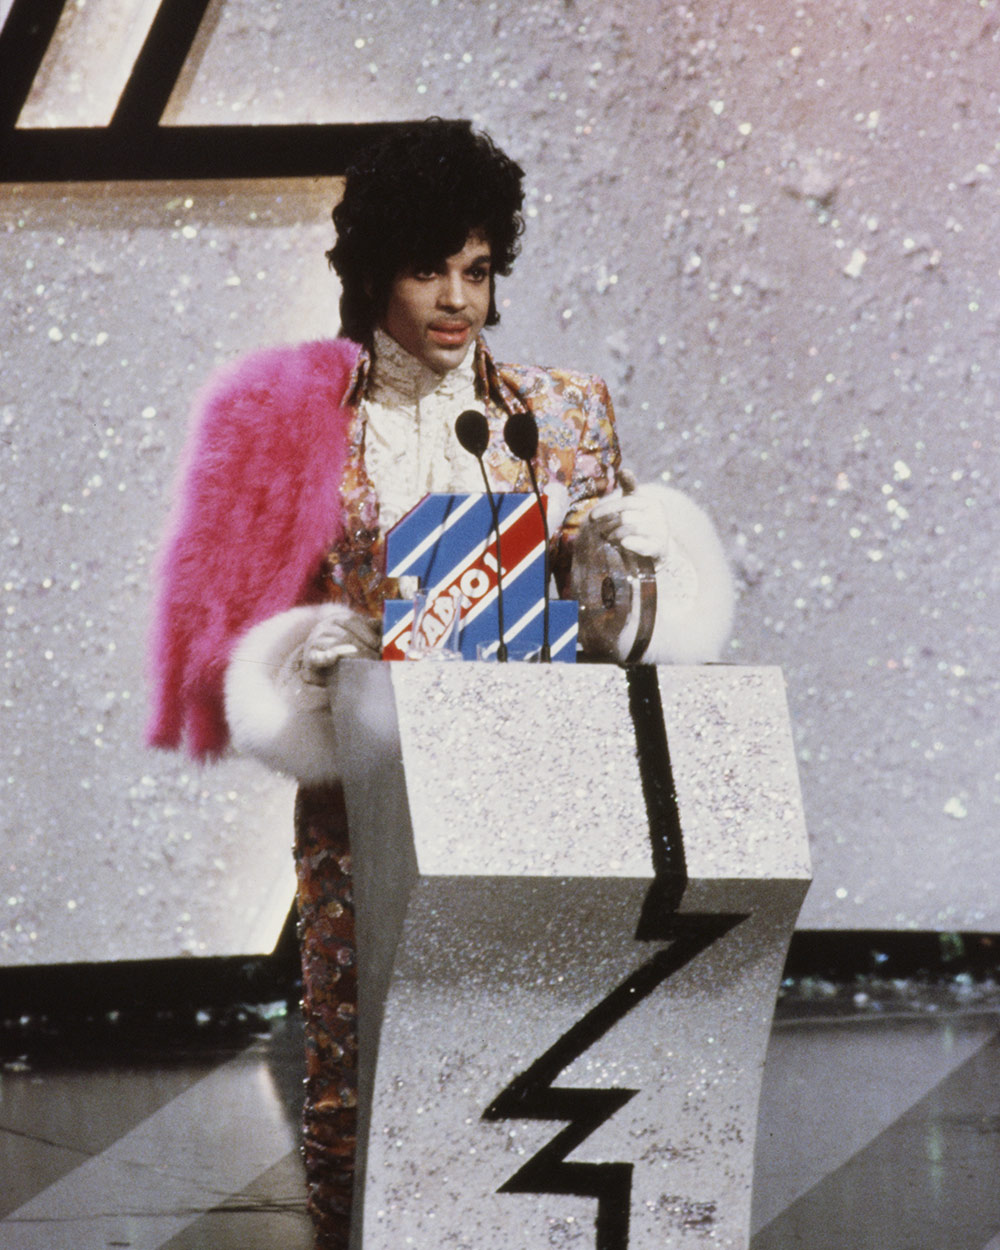 Prince wins Best International Artist at the BRIT Awards, 1985